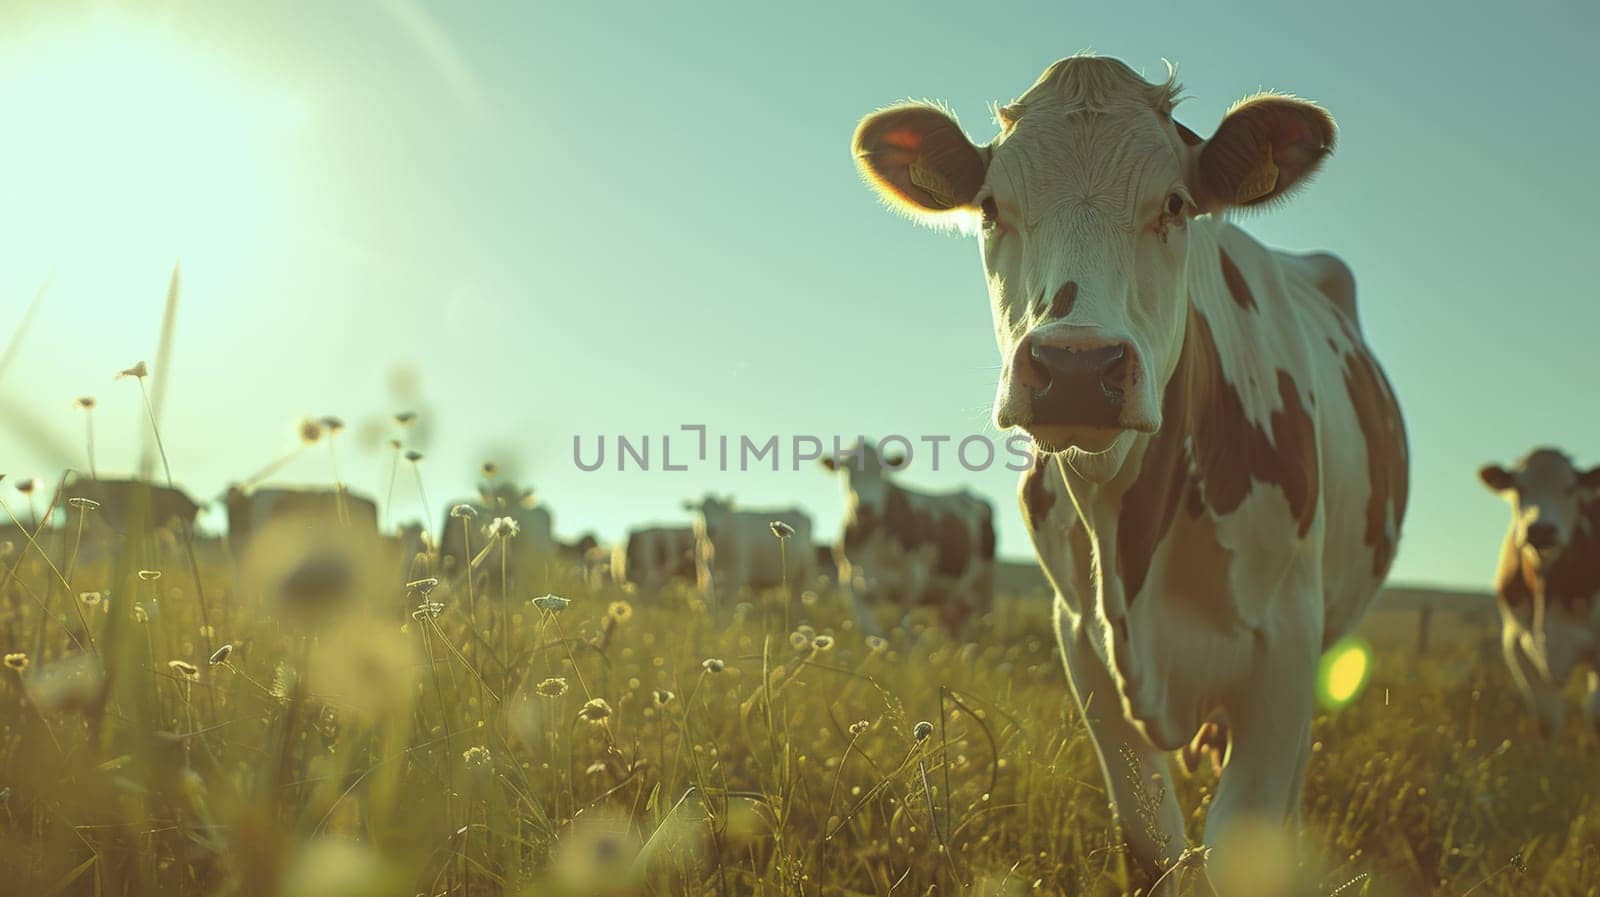 Cow farm, An image of cows in a meadow, Agriculture animal, organic farm by nijieimu